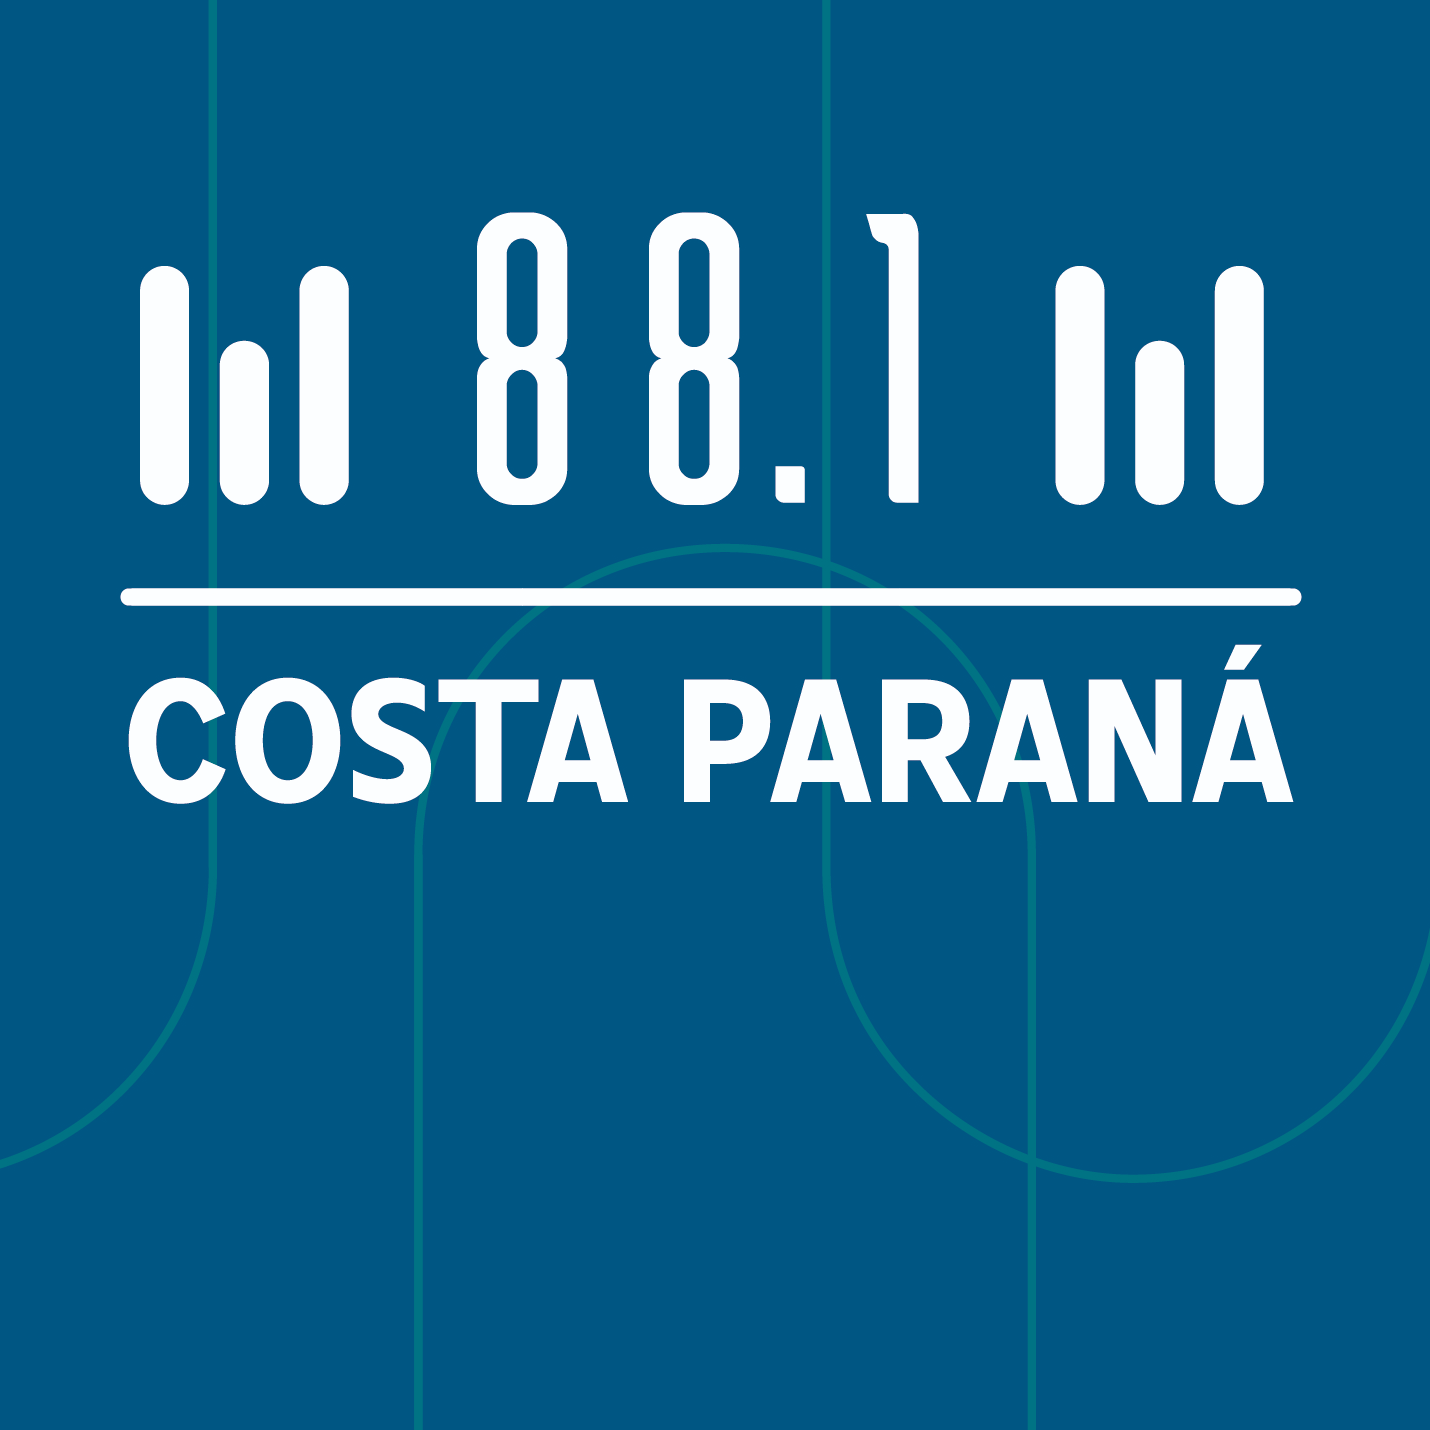 Costa Paraná 88.1